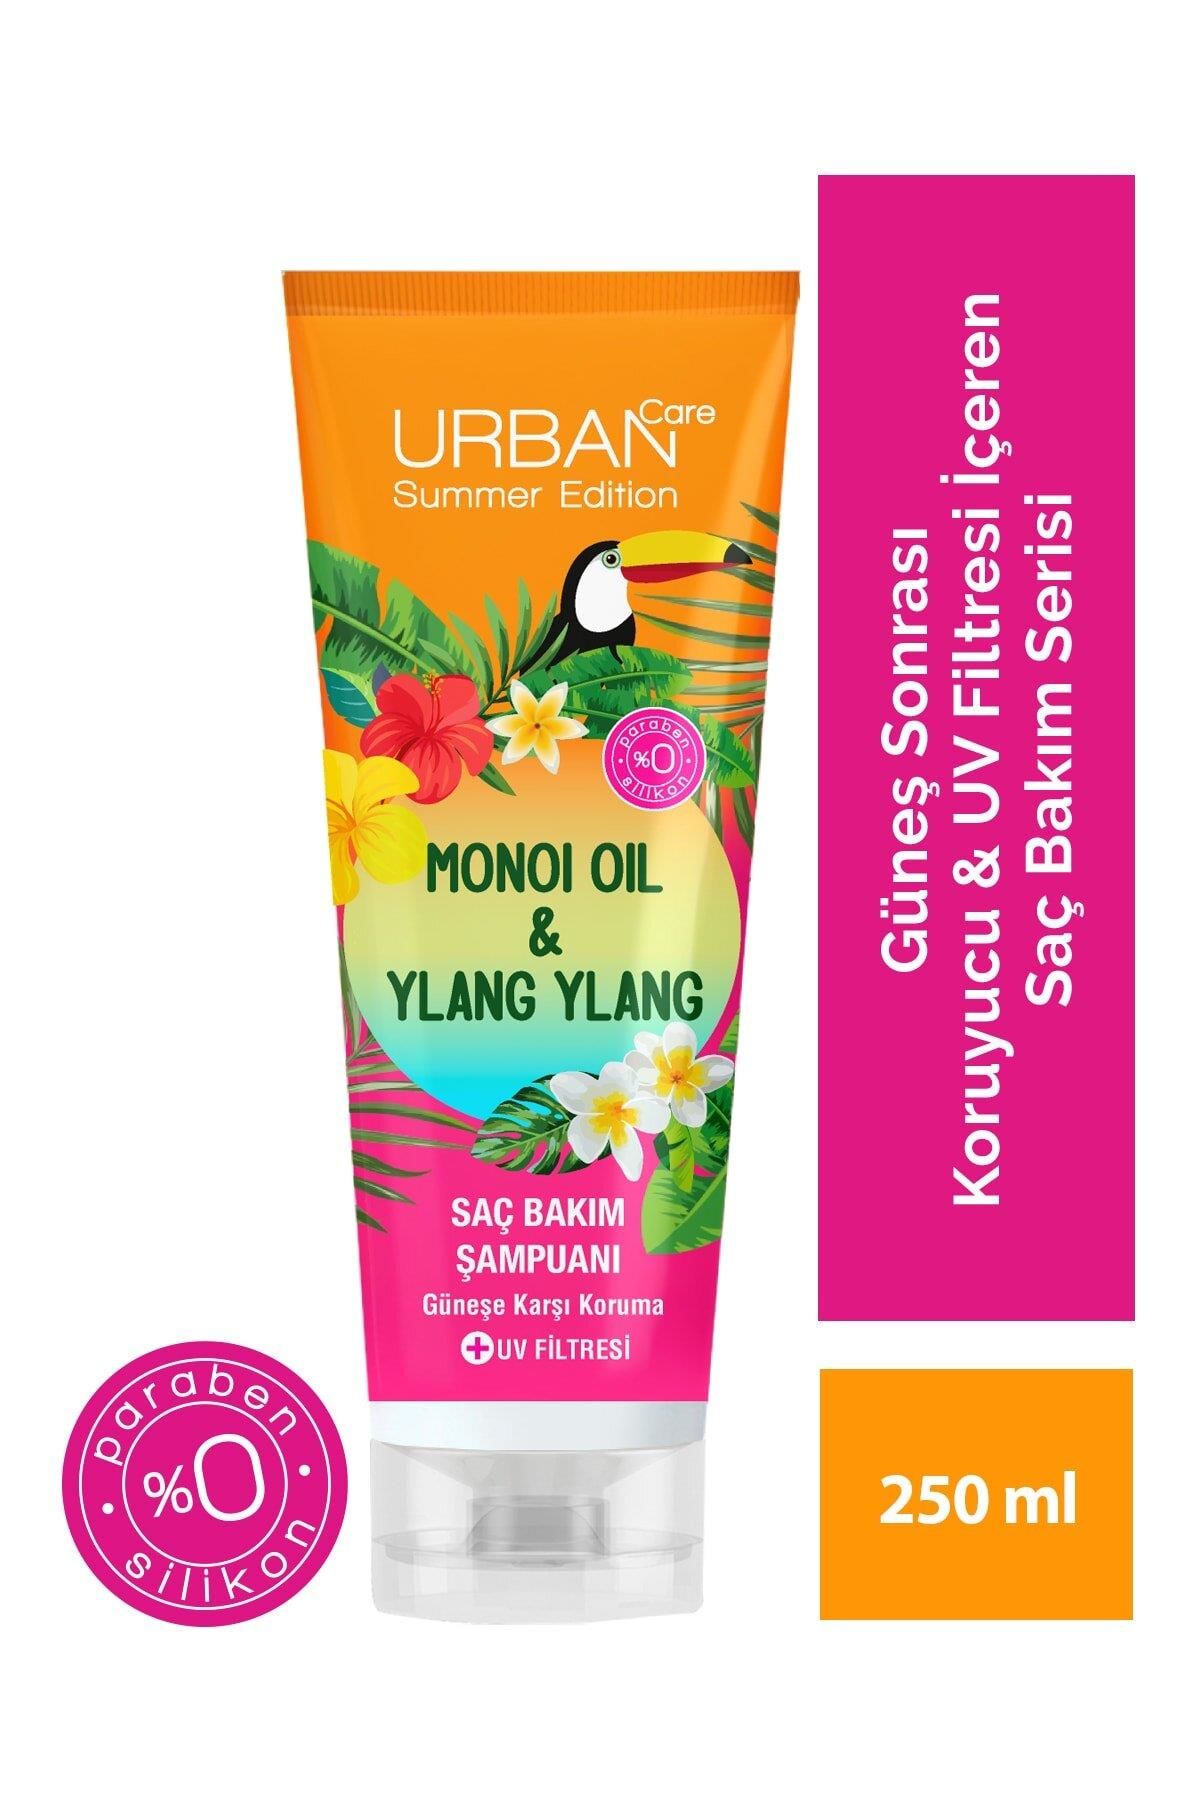 Urban Care Urban Summer Edition Monoi Oil & Ylang Ylang Saç Bakım Şampuanı +Uv Filtresi 250ML